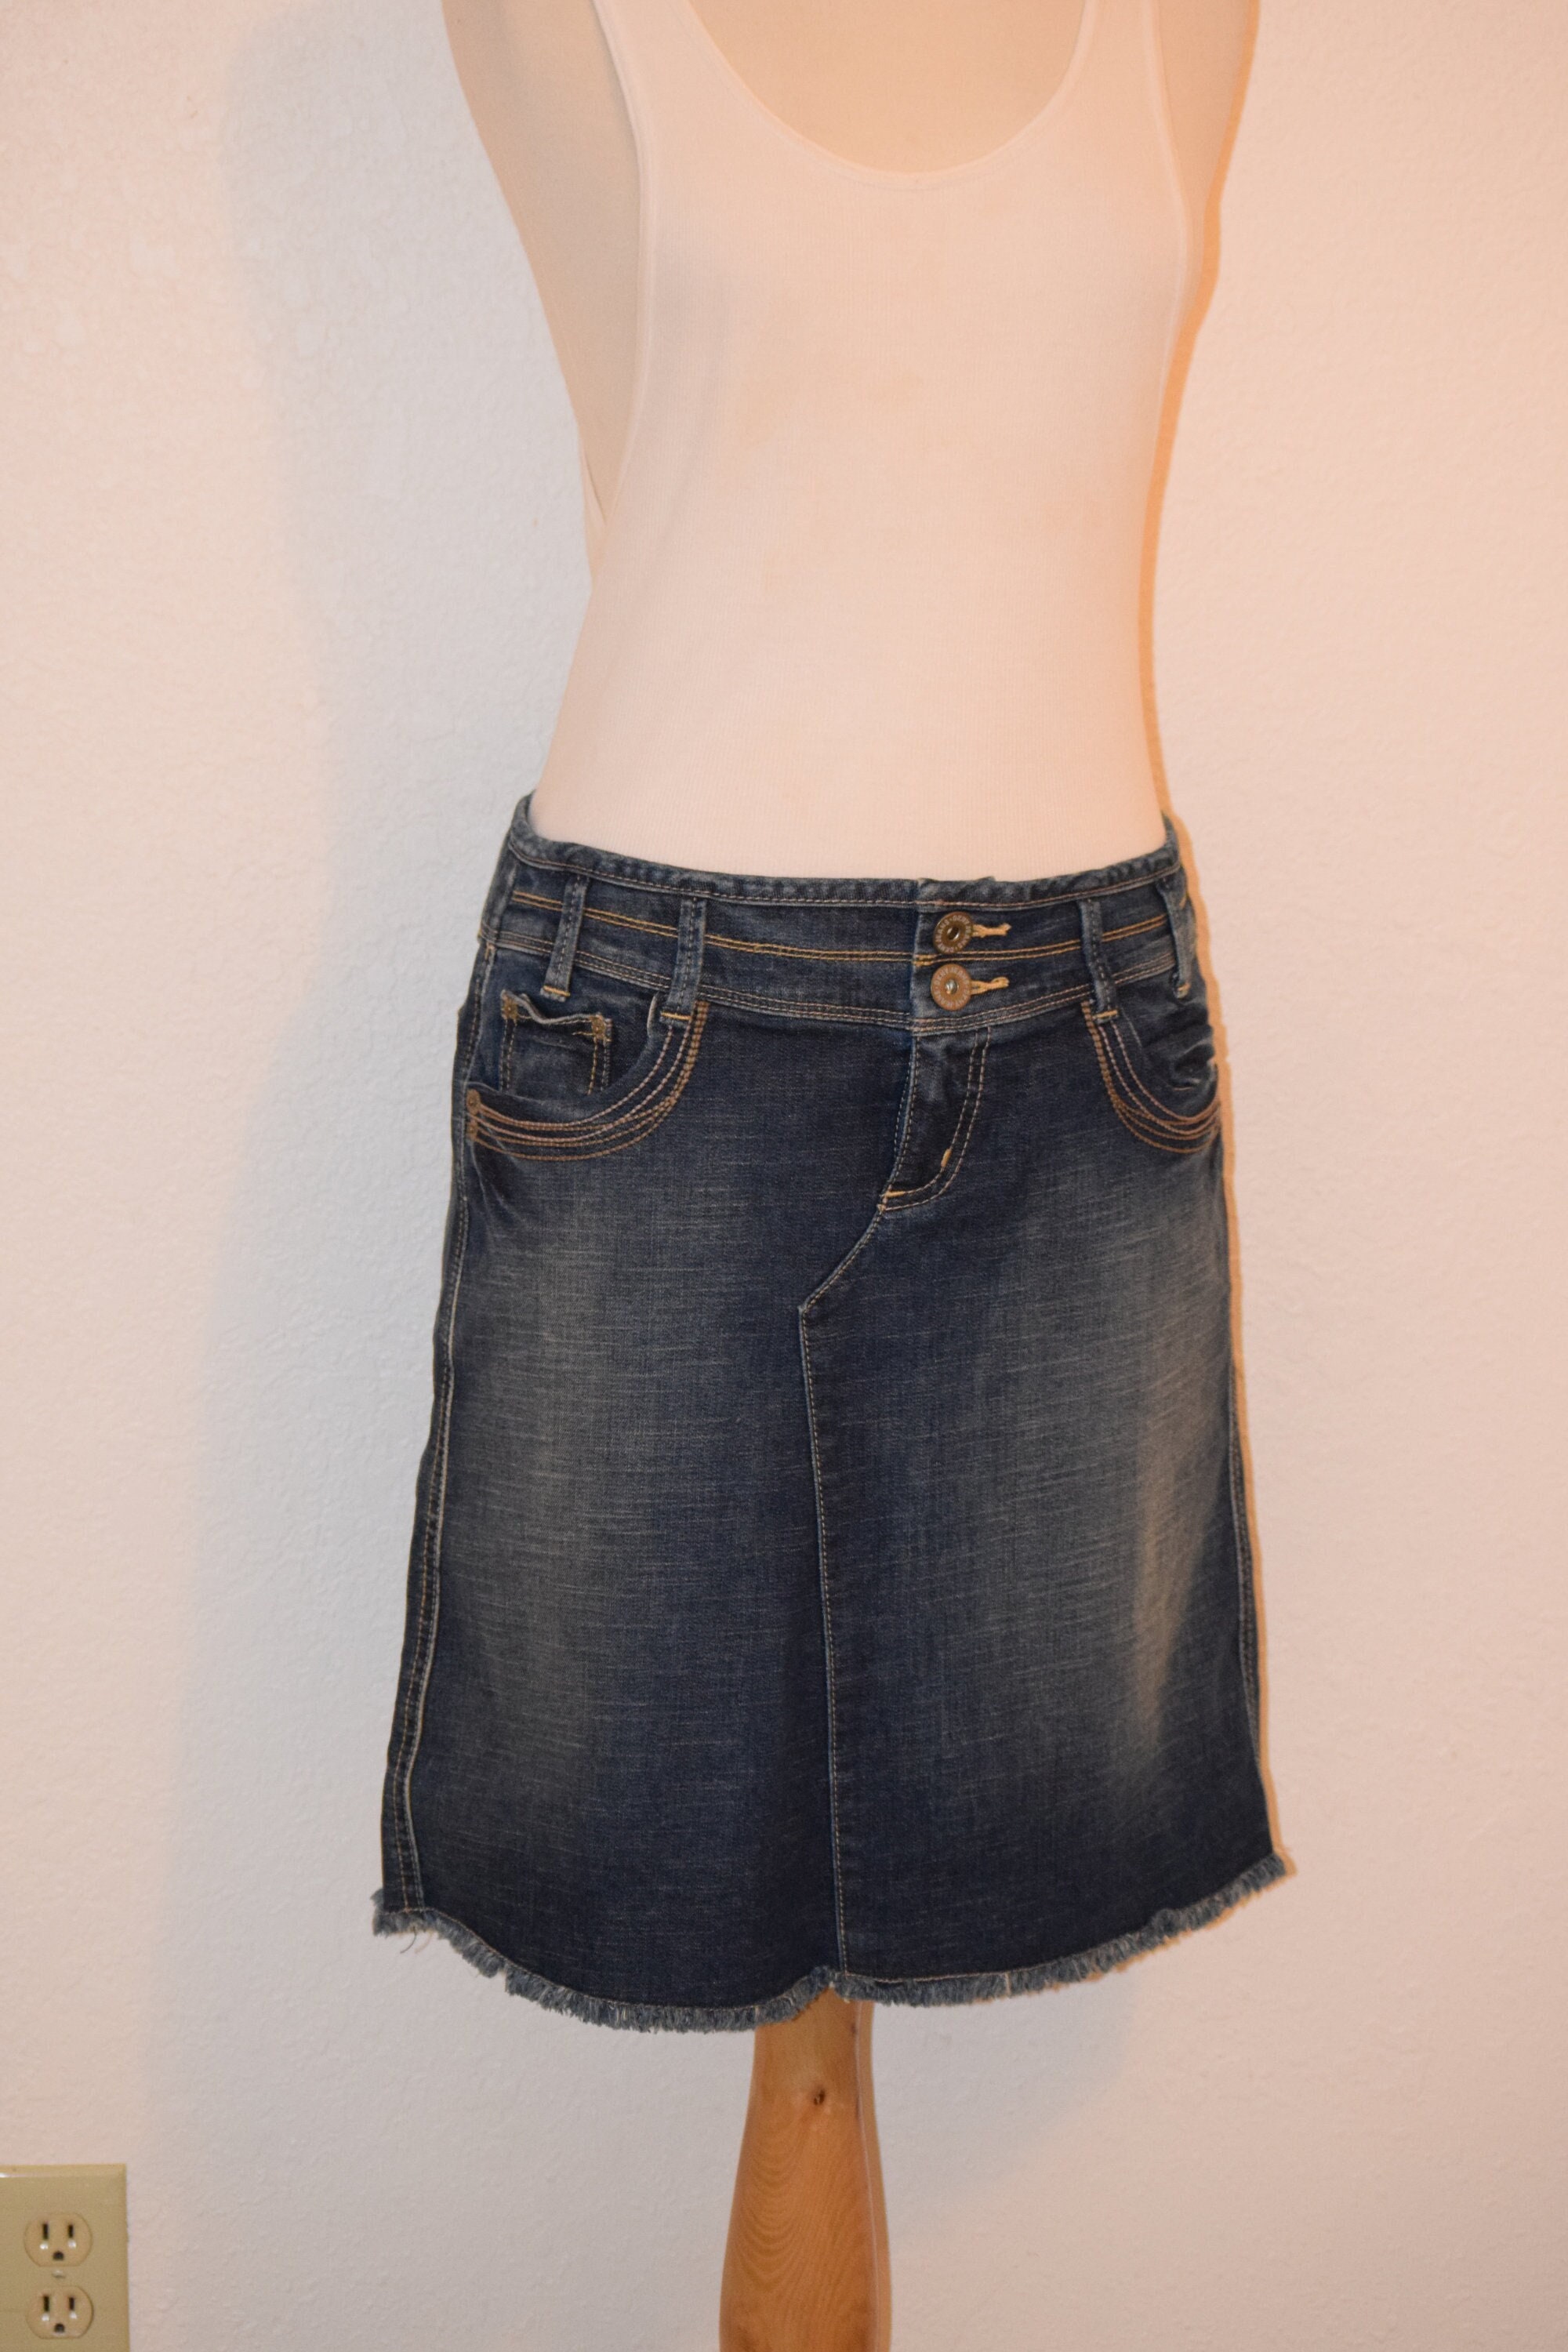 Throw Back \'DKNY Jeans\' Medium Washed Denim Skirt With Frayed Hem / Western Denim  Skirt / Summer Festival Skirt Size 8 / Medium - Etsy | Jeansröcke